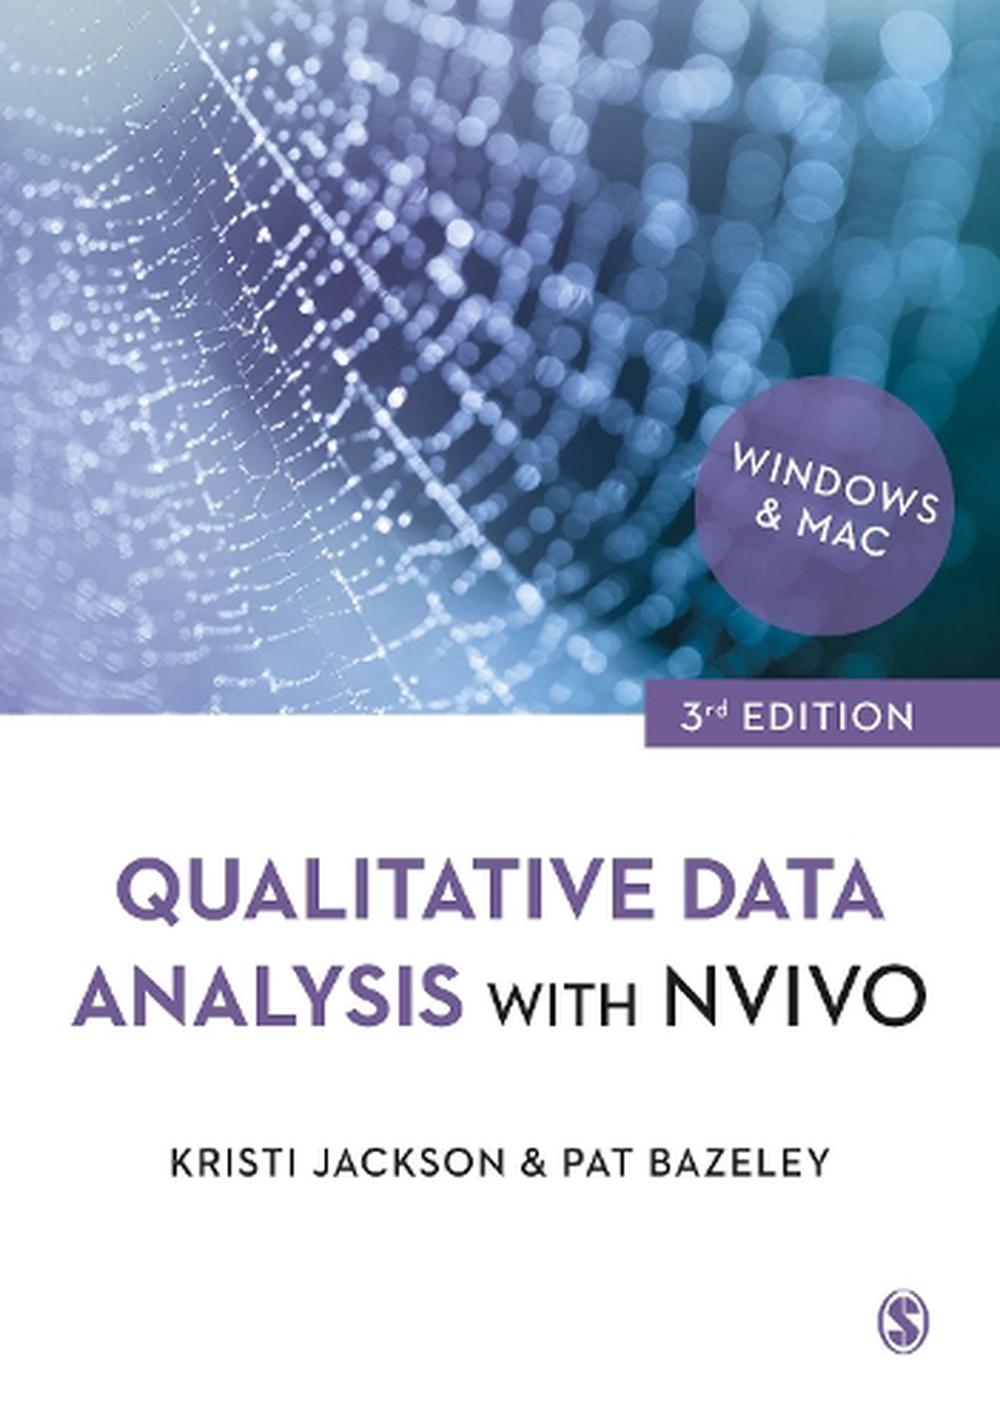 nvivo qualitative data analysis software free download